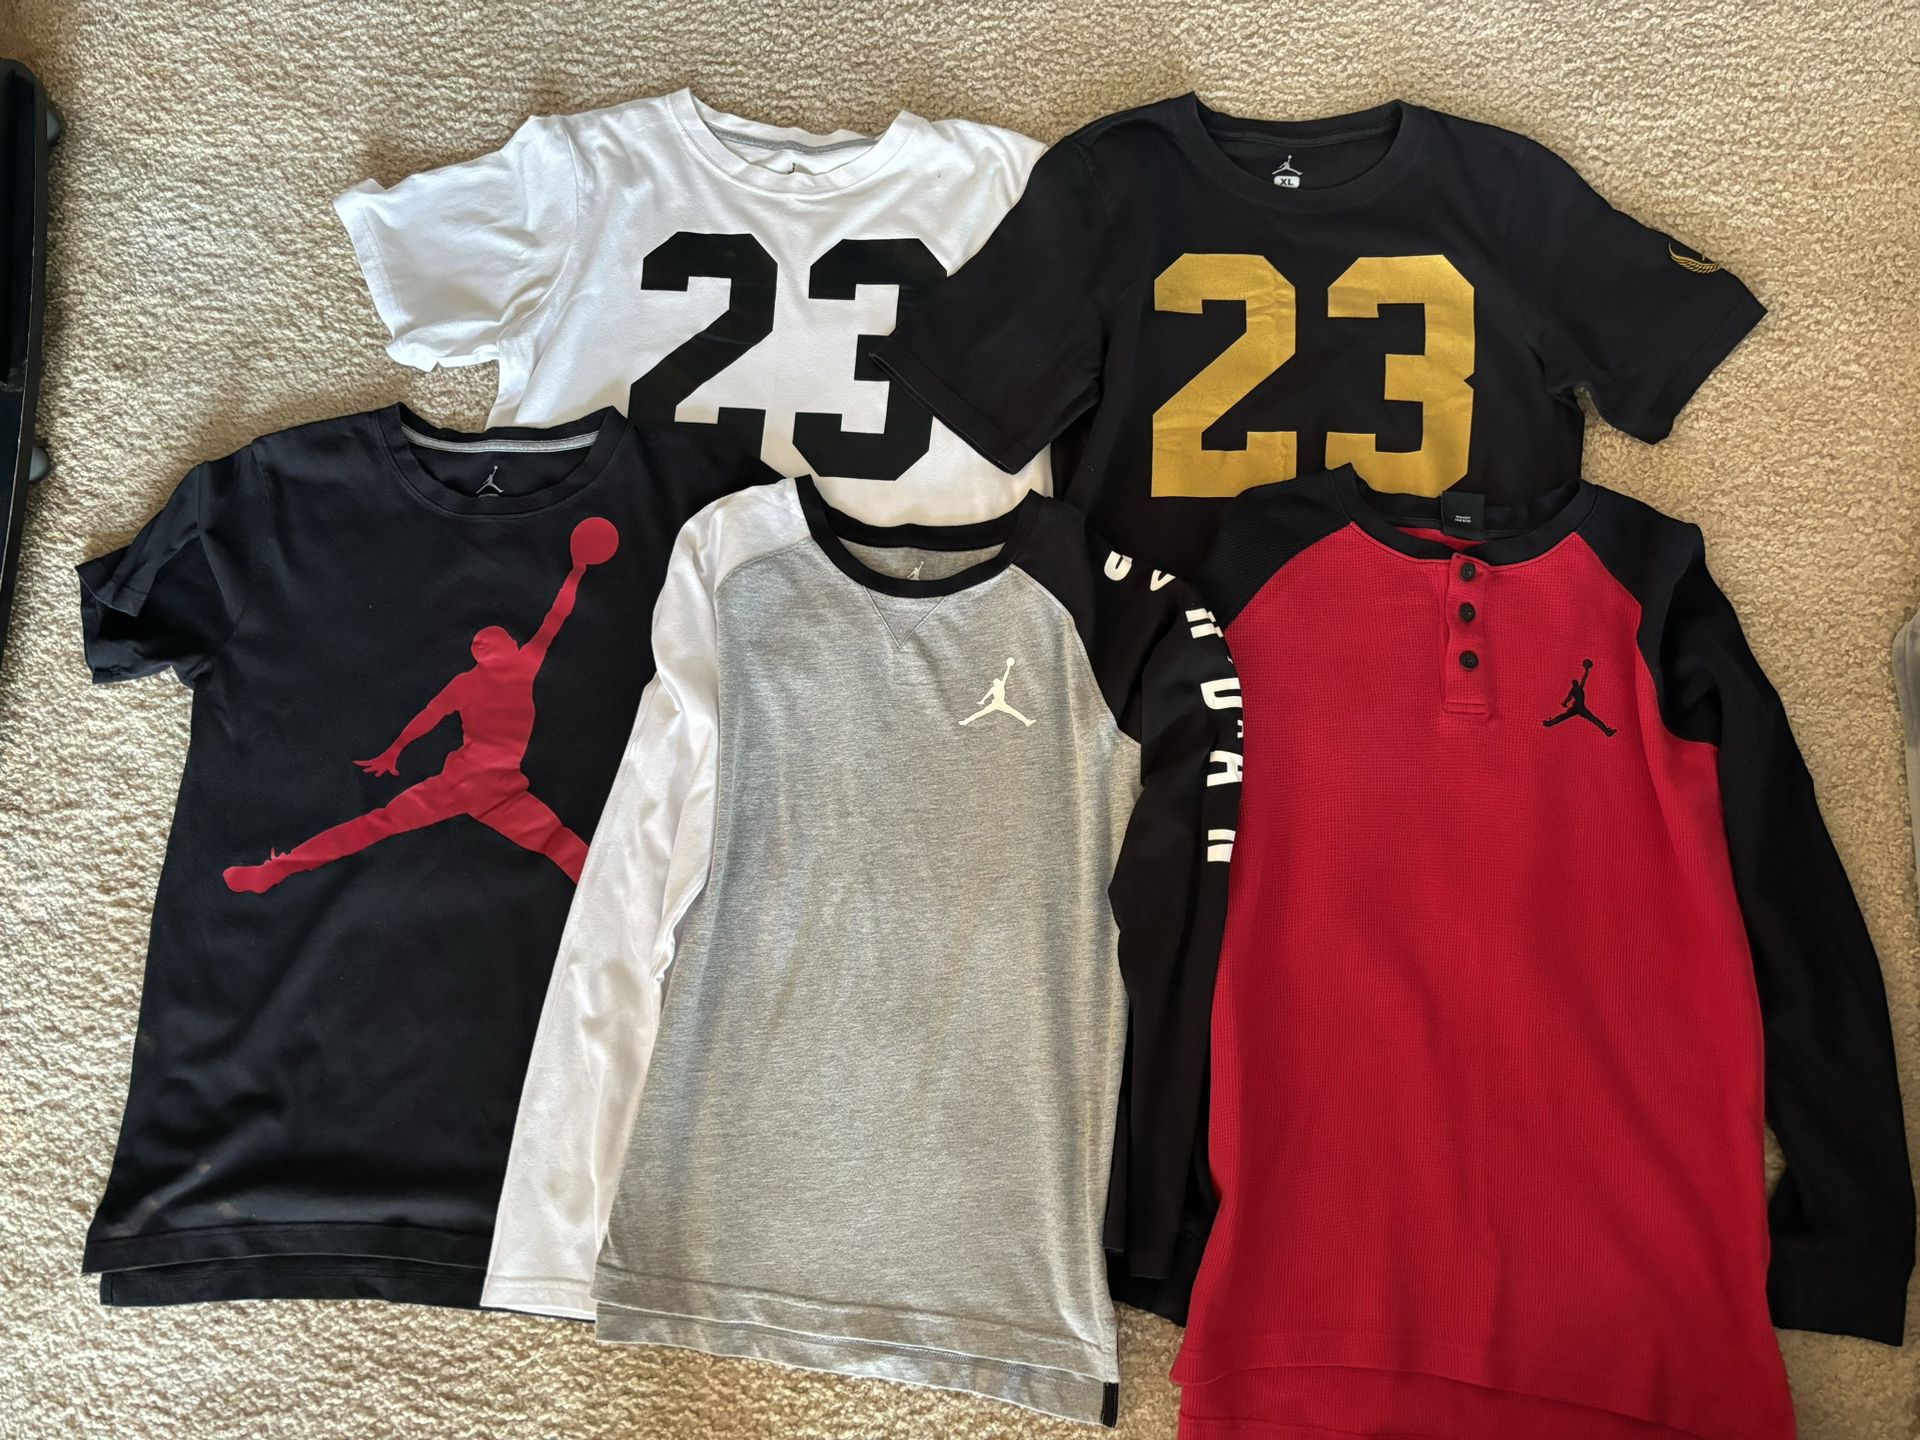 Boys Jordan Shirts (size Large)